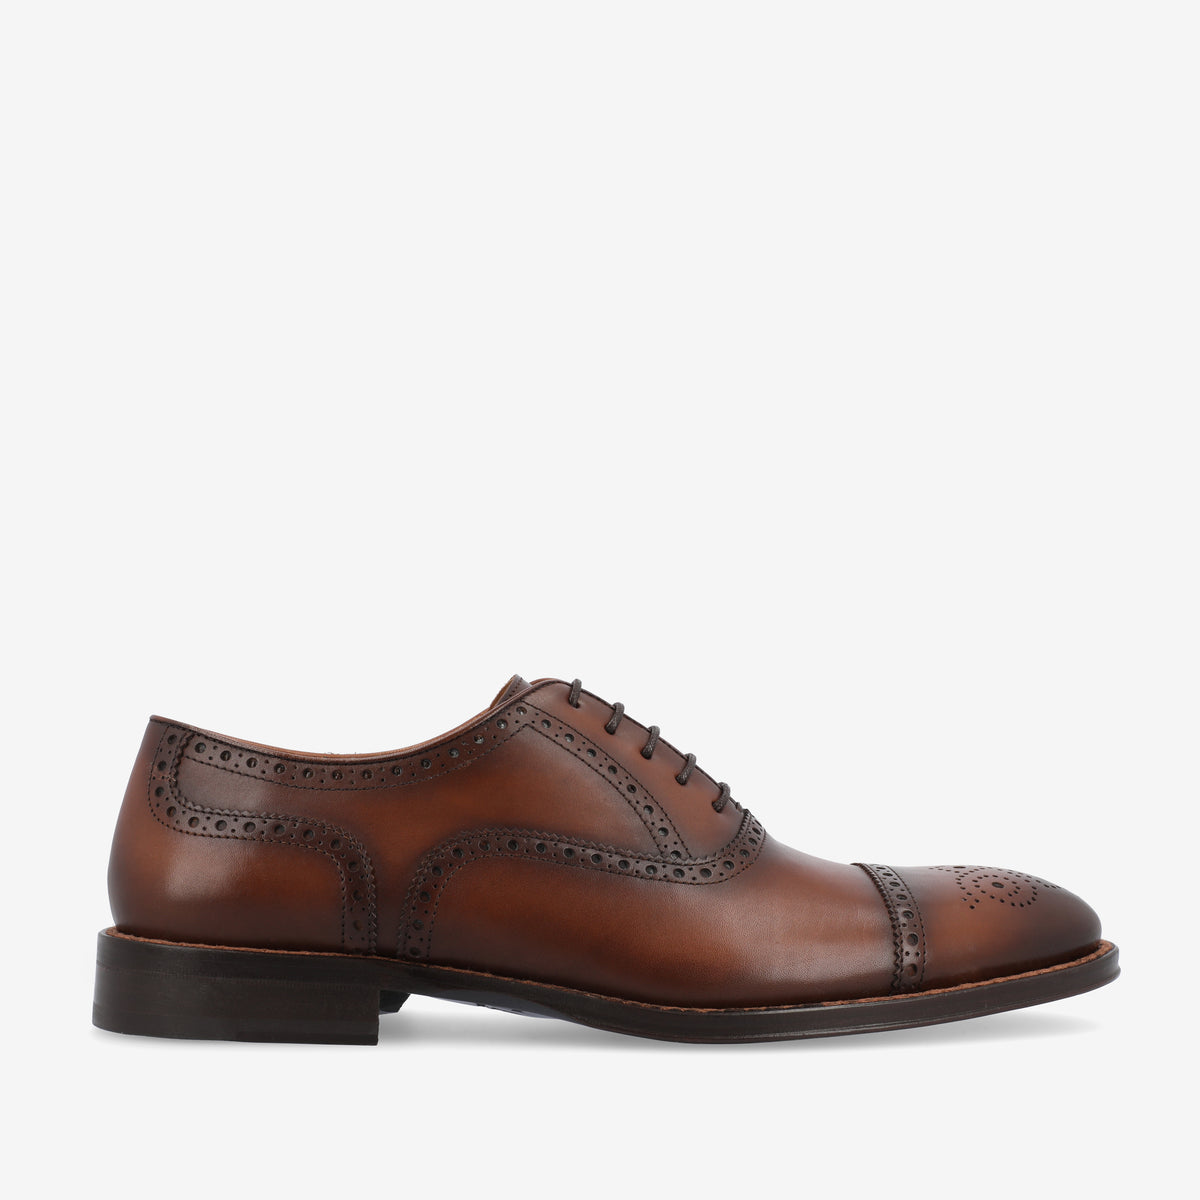 The Noah Shoe in Brown